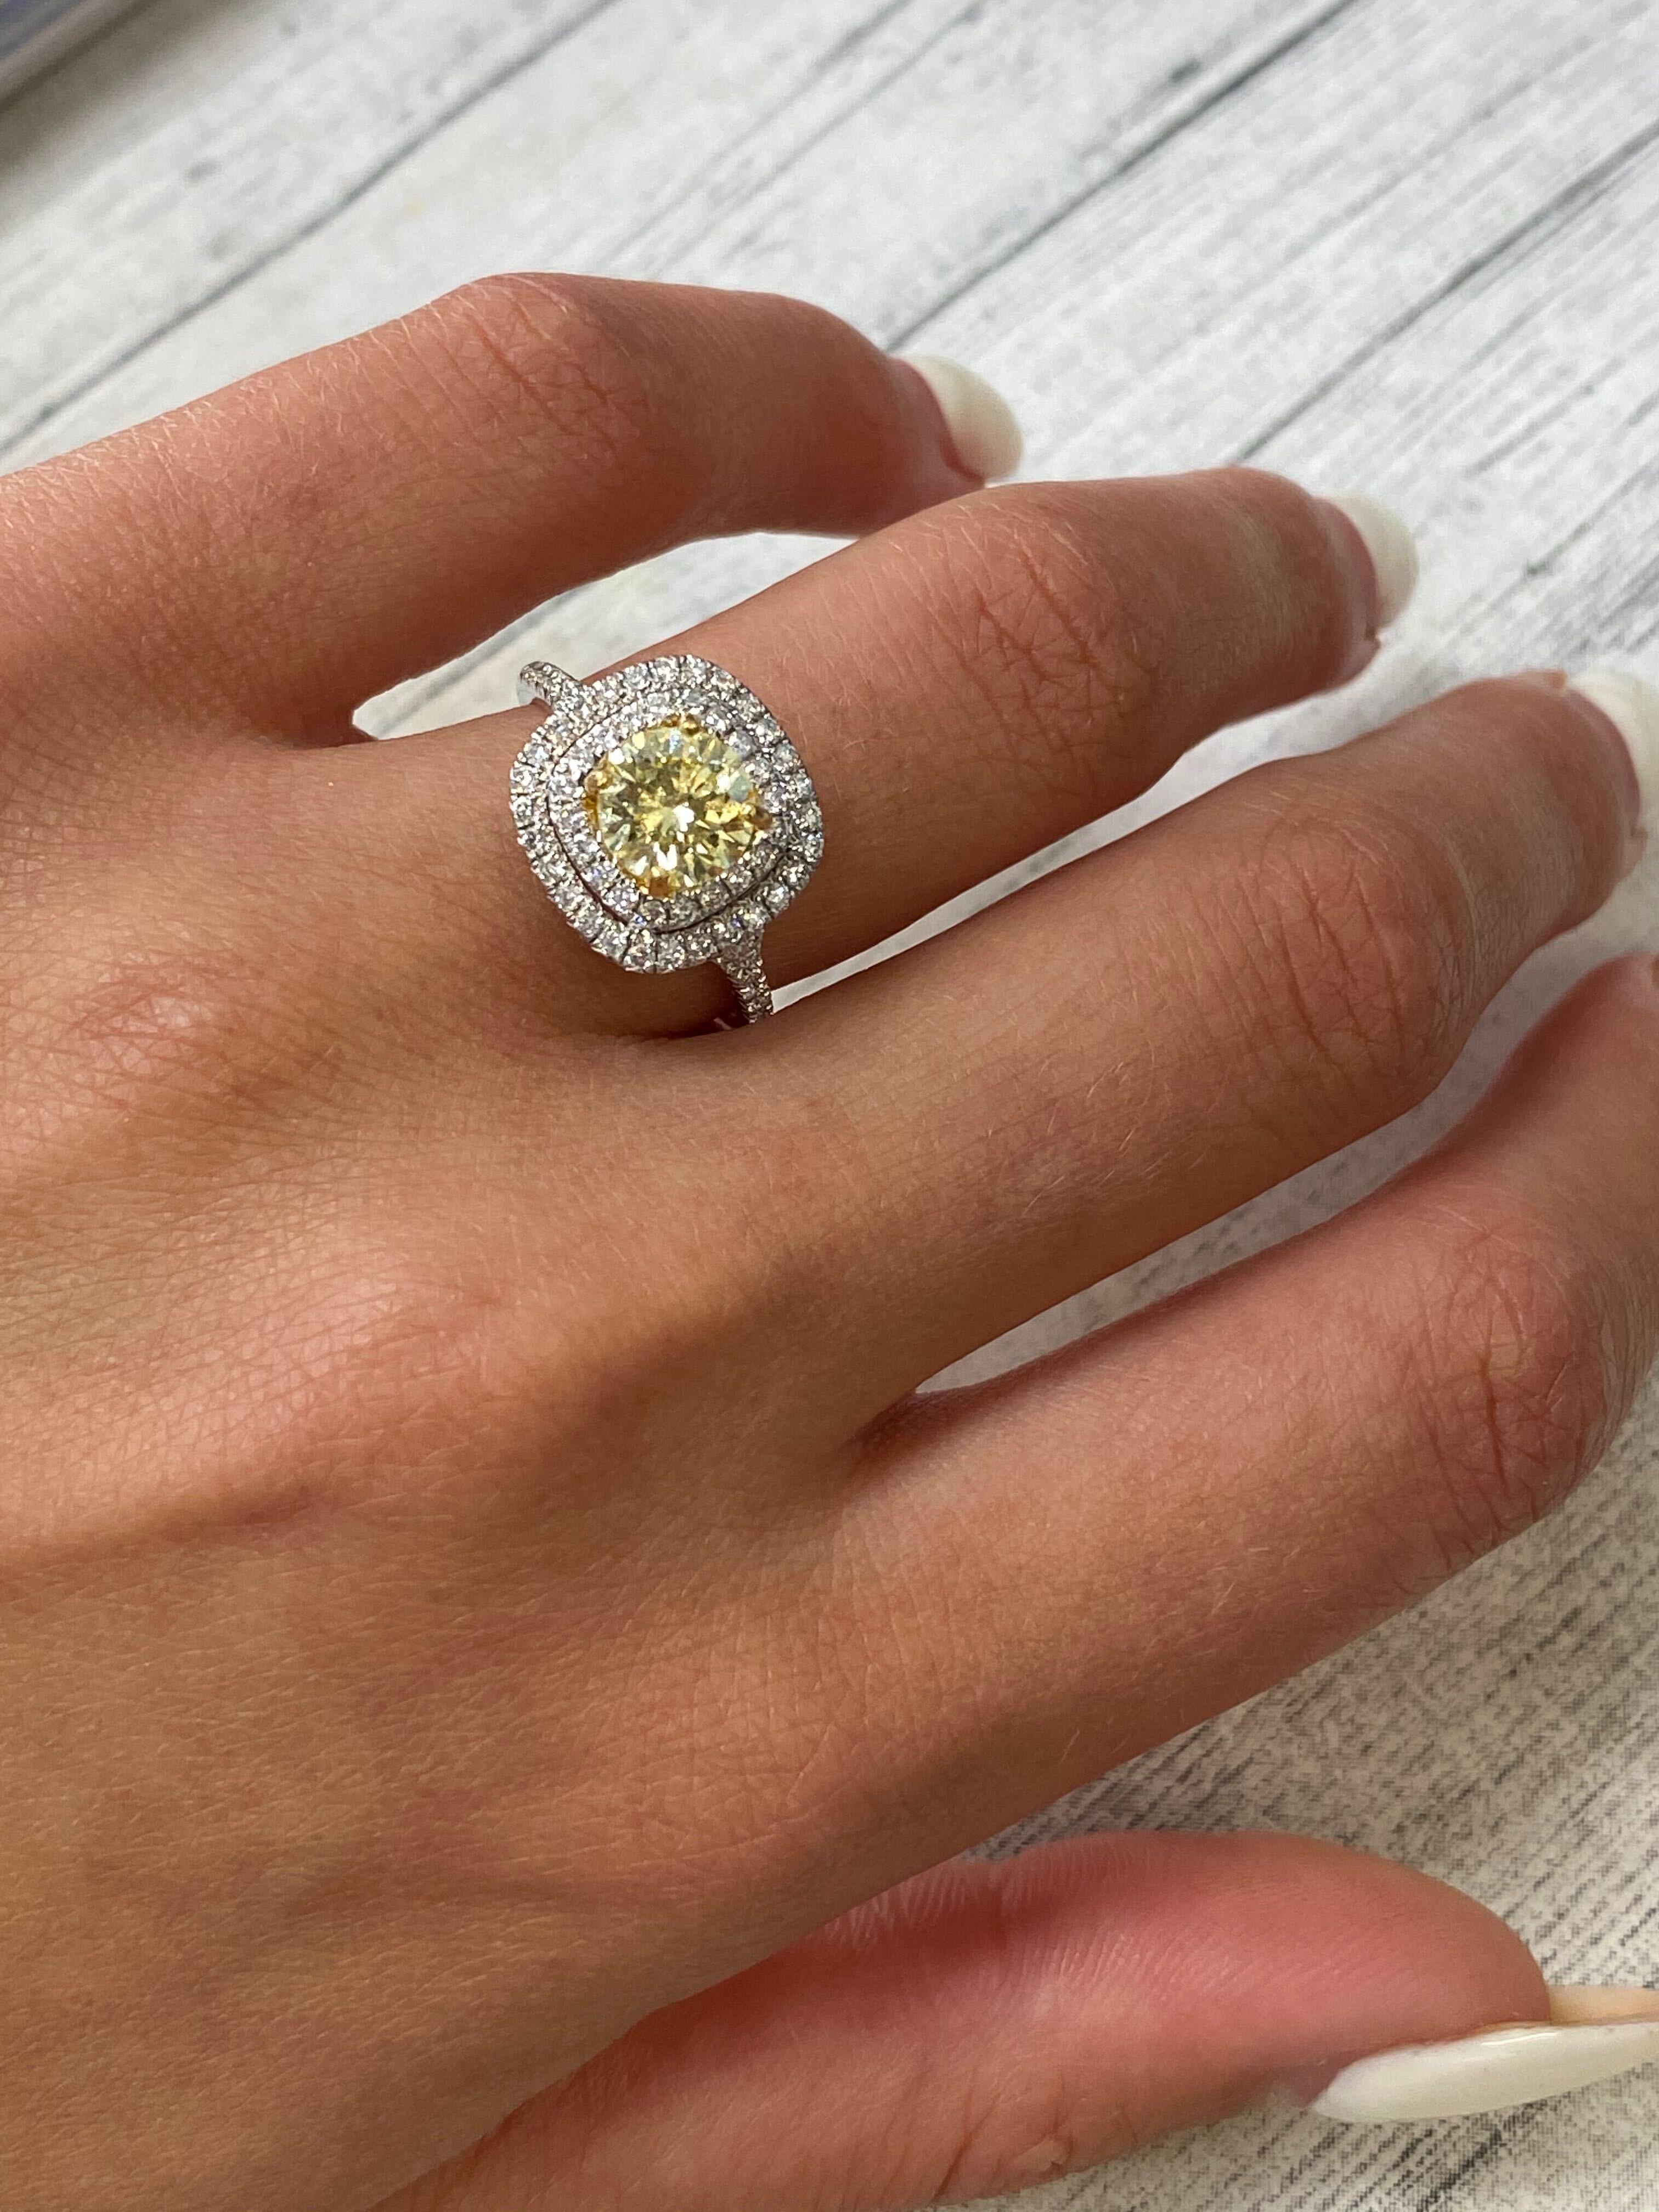 Rachel Koen 18 Karat White Gold Round Cut Fancy Yellow Diamond Ring 1.13 Carat For Sale 3